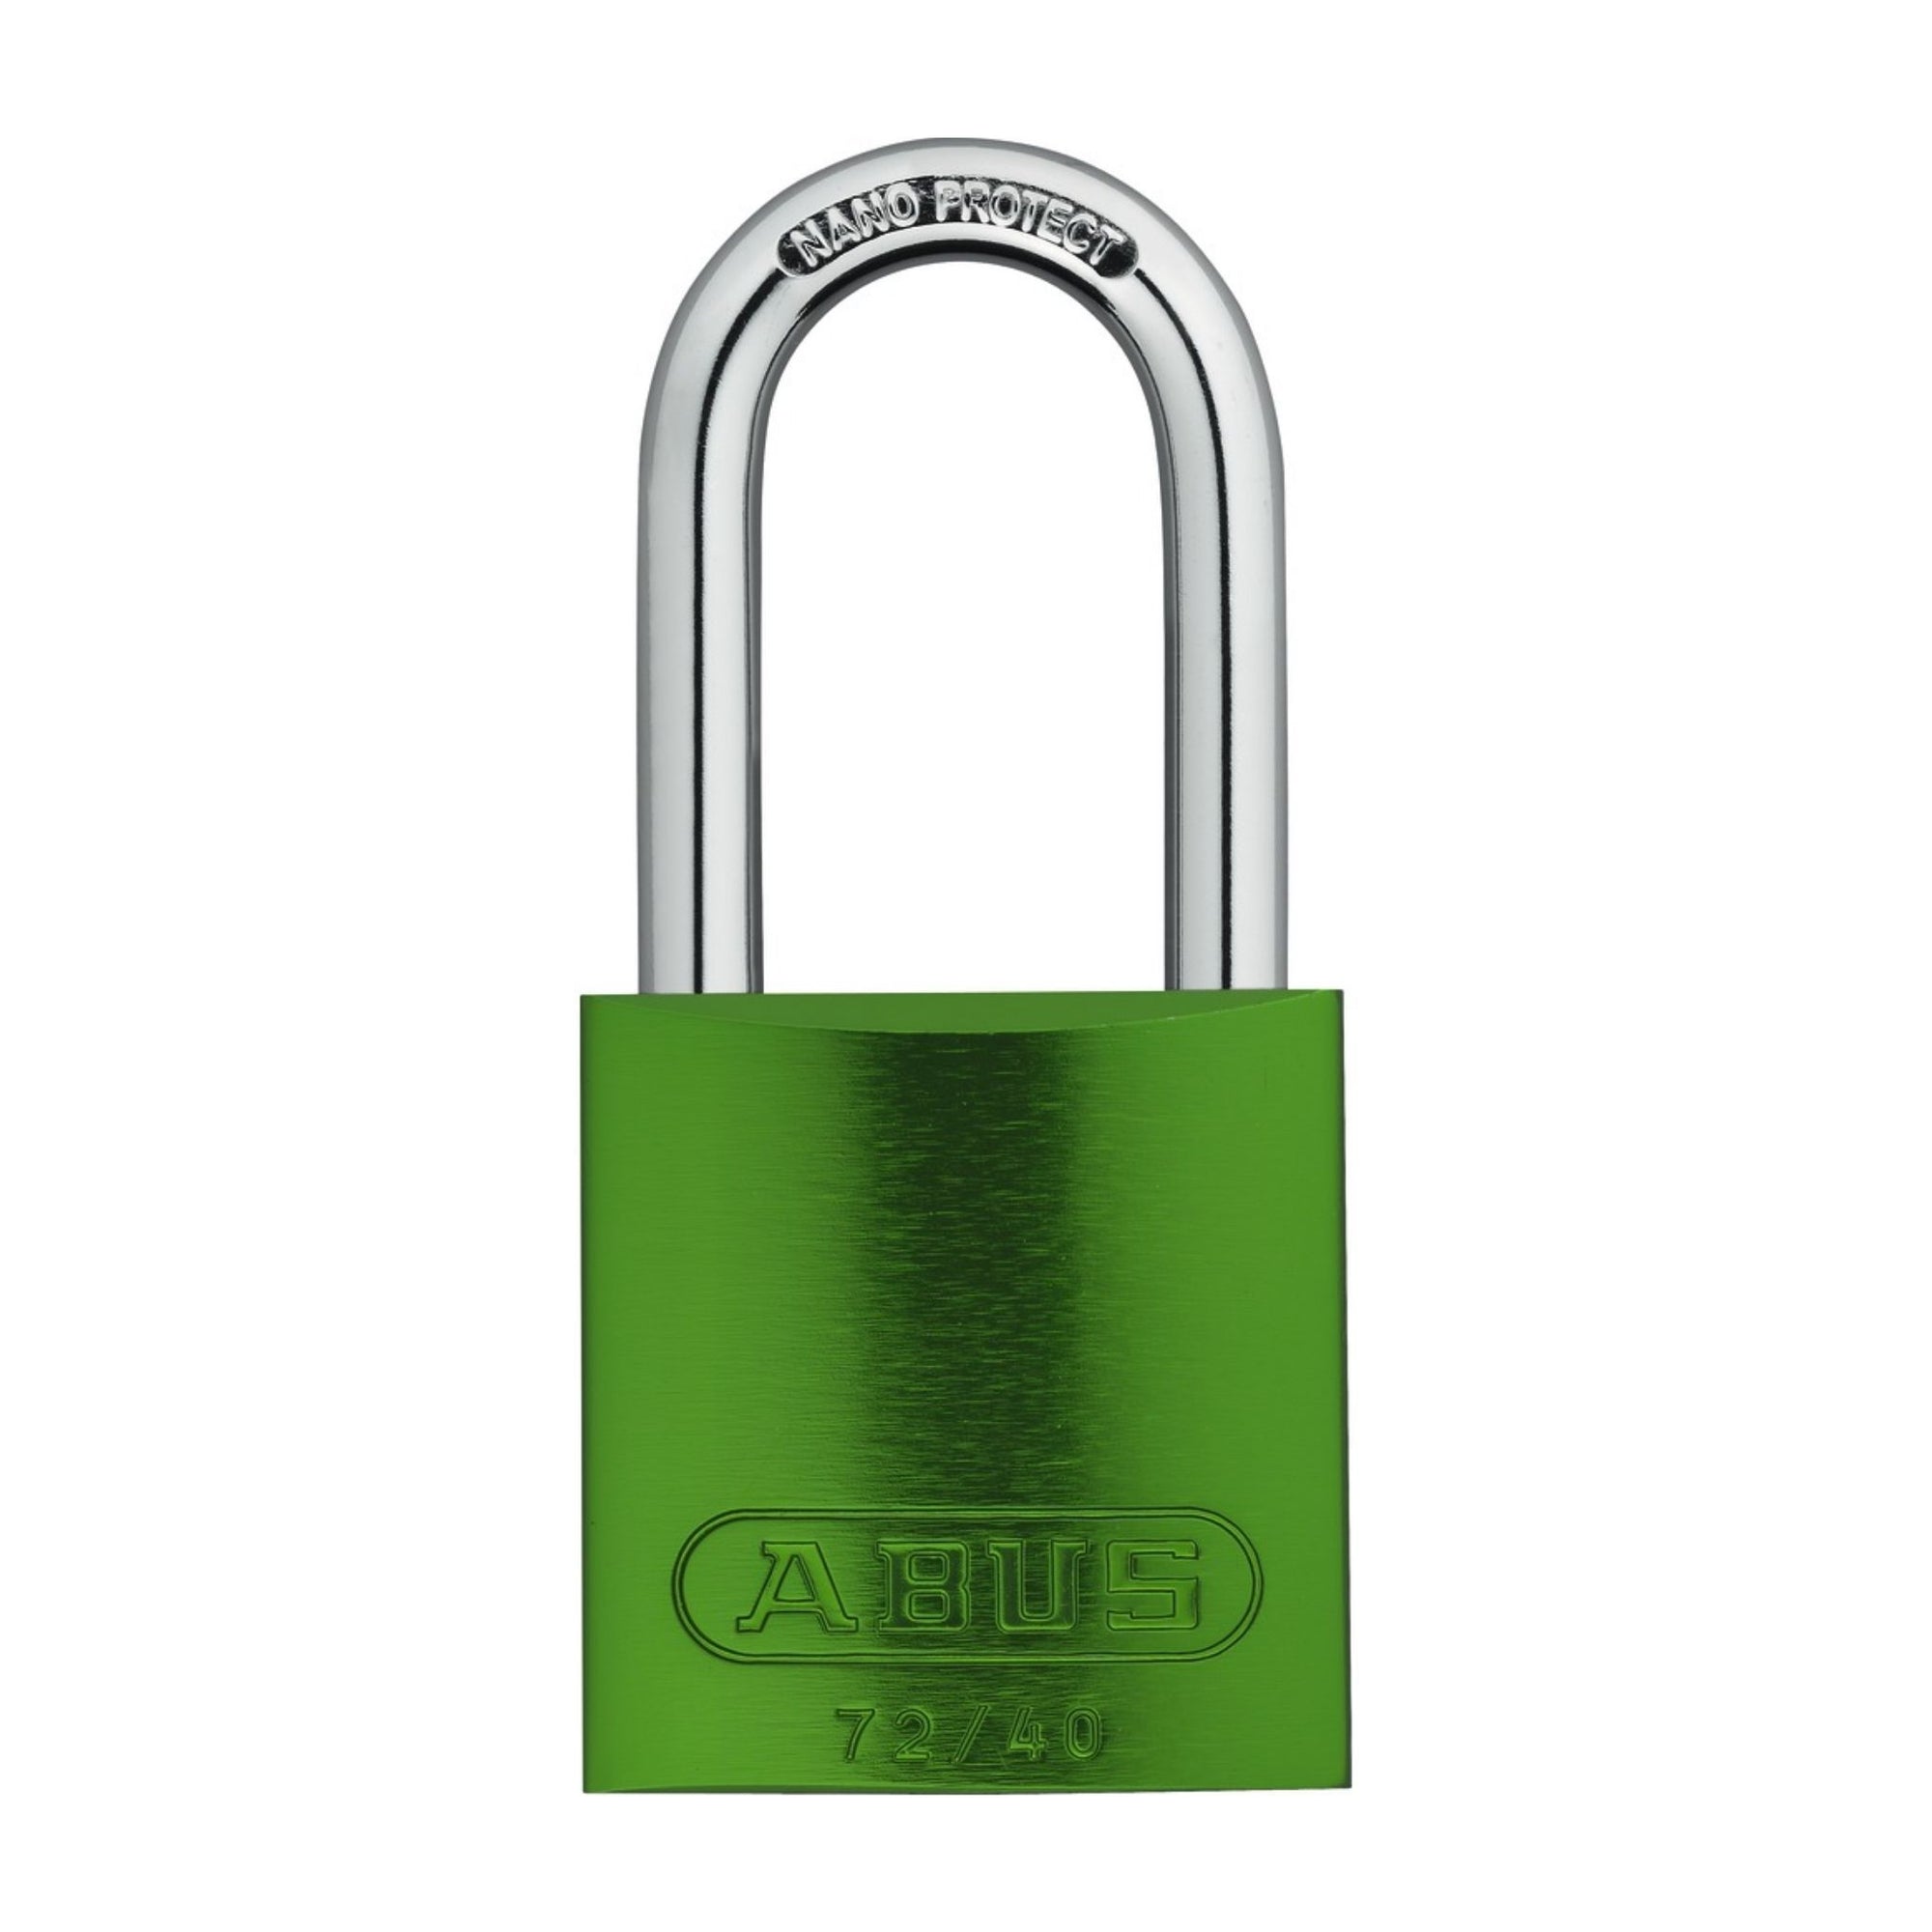 Abus 72/40HB40 KA TT00036 Green Titalium Safety Padlock with 1-1/2" Shackle, Keyed Alike to Match Existing Key Number KATT00036 - The Lock Source